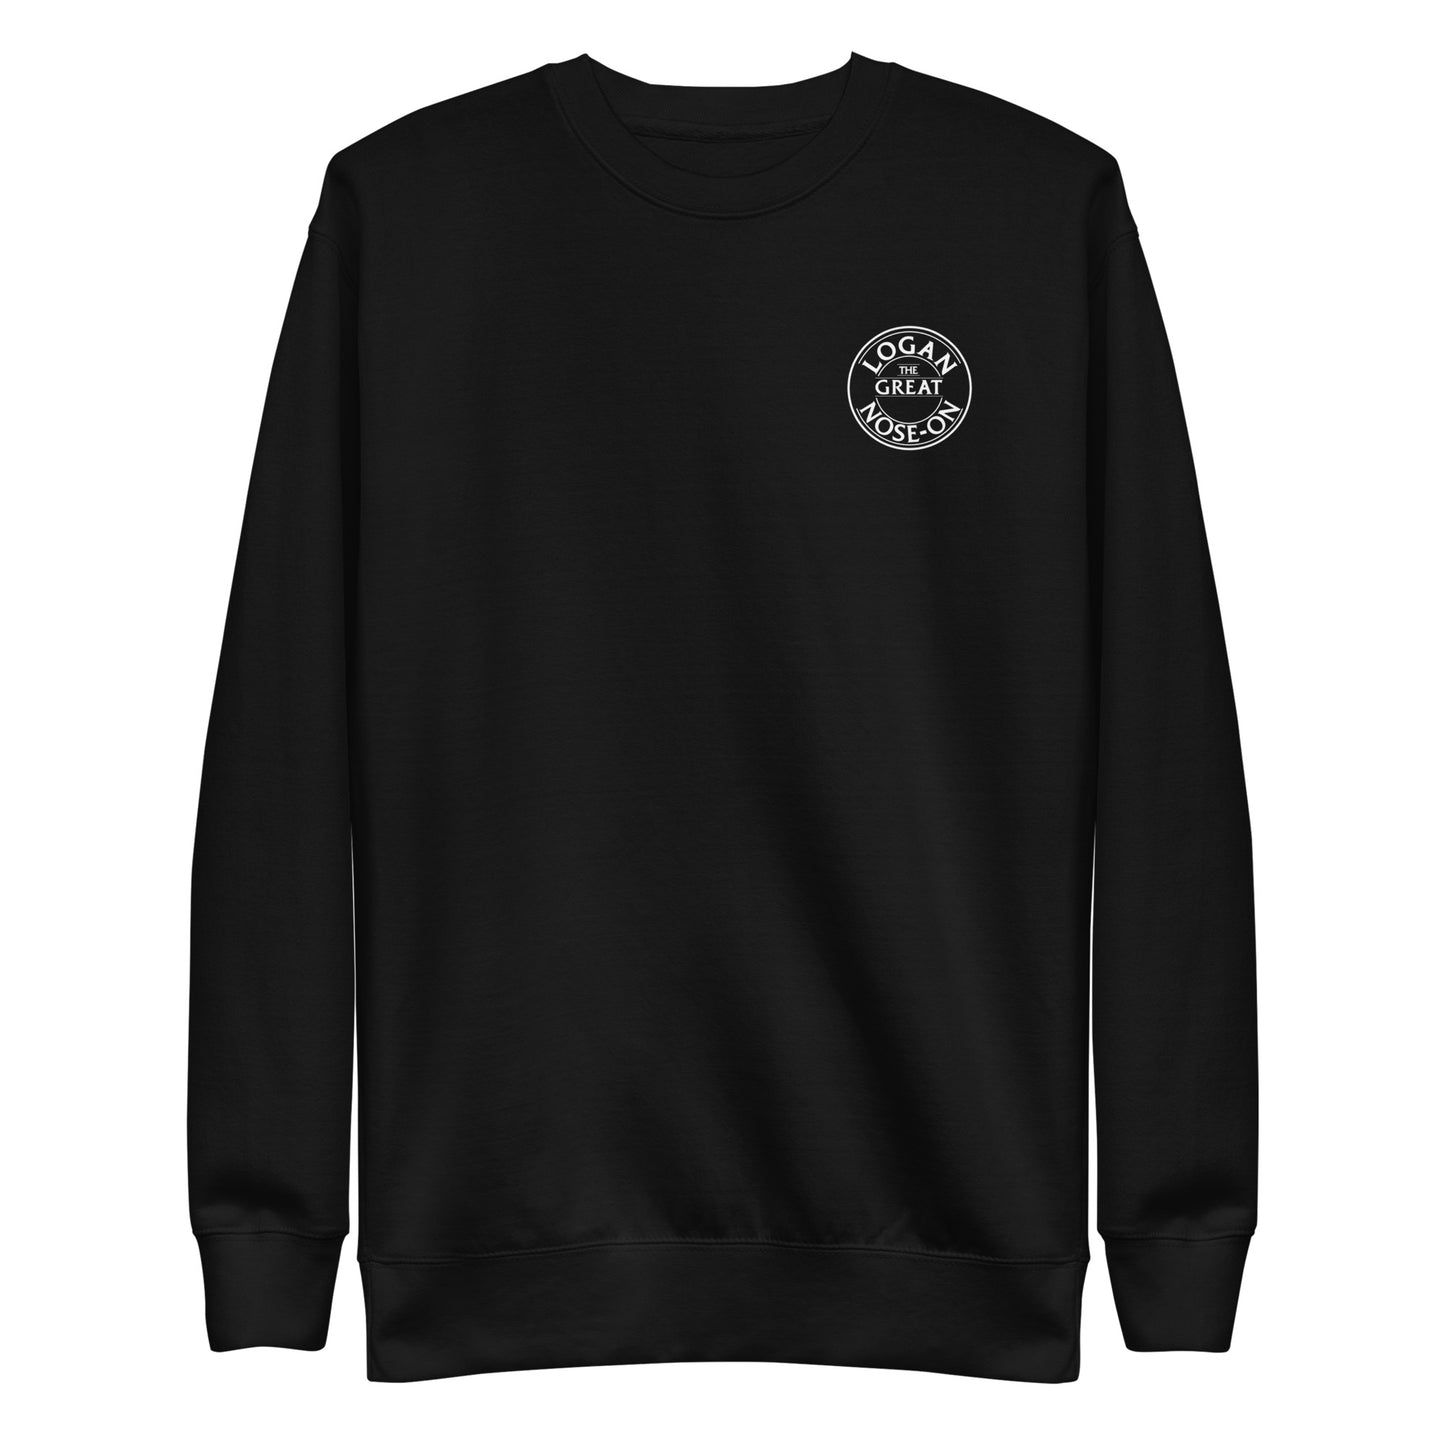 Black Unisex Premium Sweatshirt small front logo only